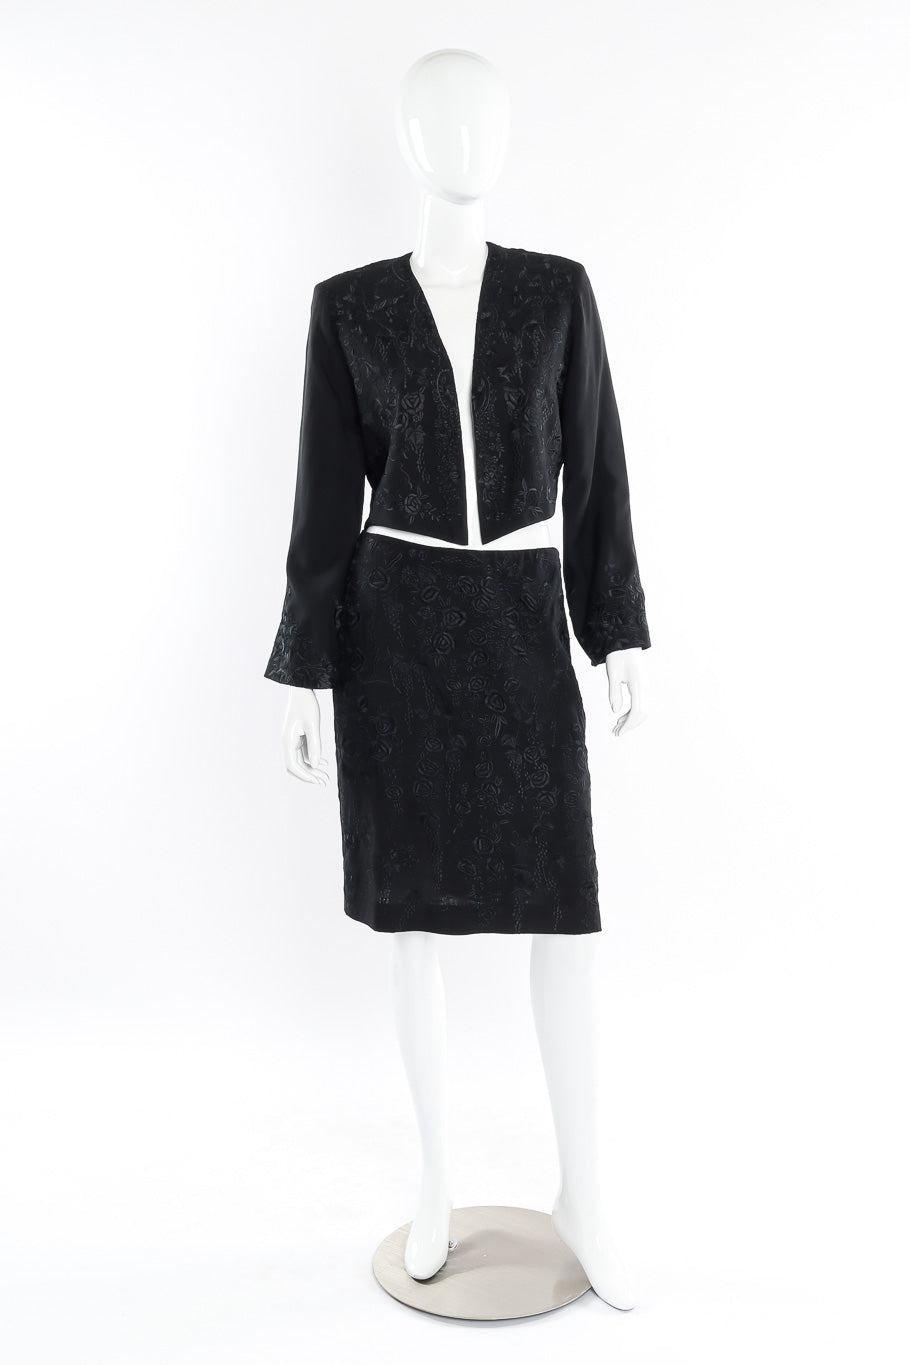 Jacket and skirt set by Donna Karan mannequin full front @recessla